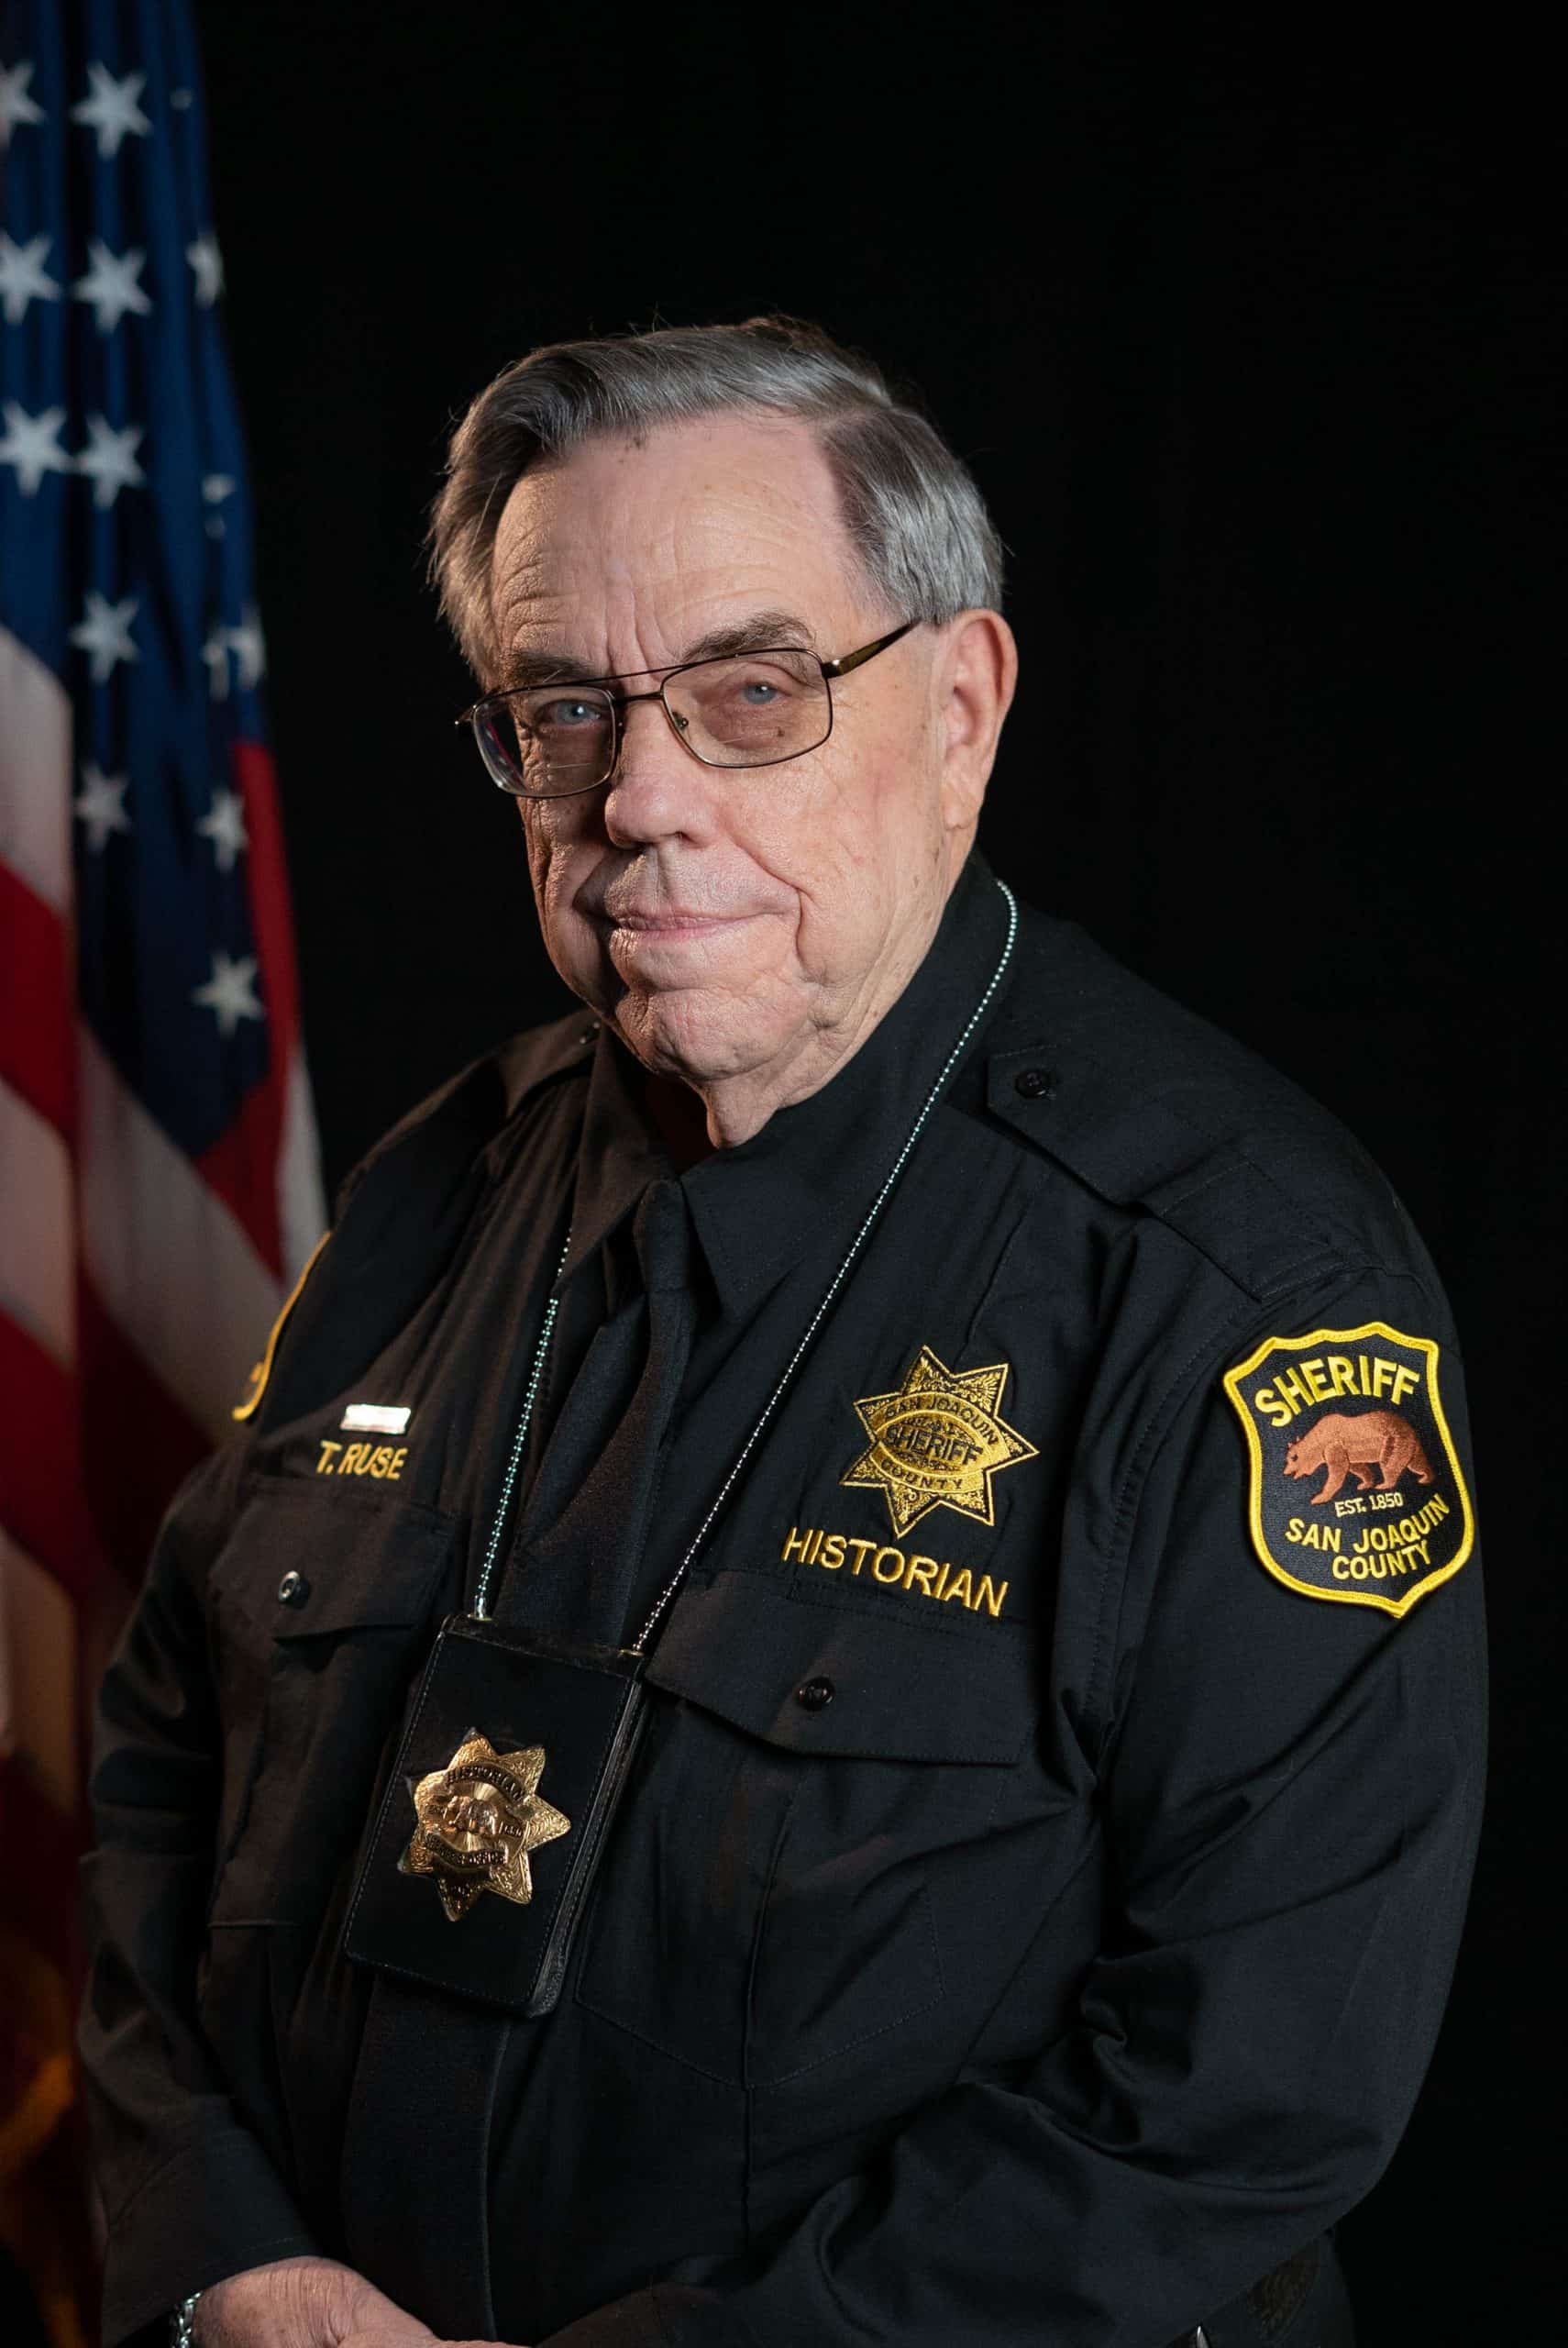 San Joaquin County Sheriff's Office Historian Todd Ruse